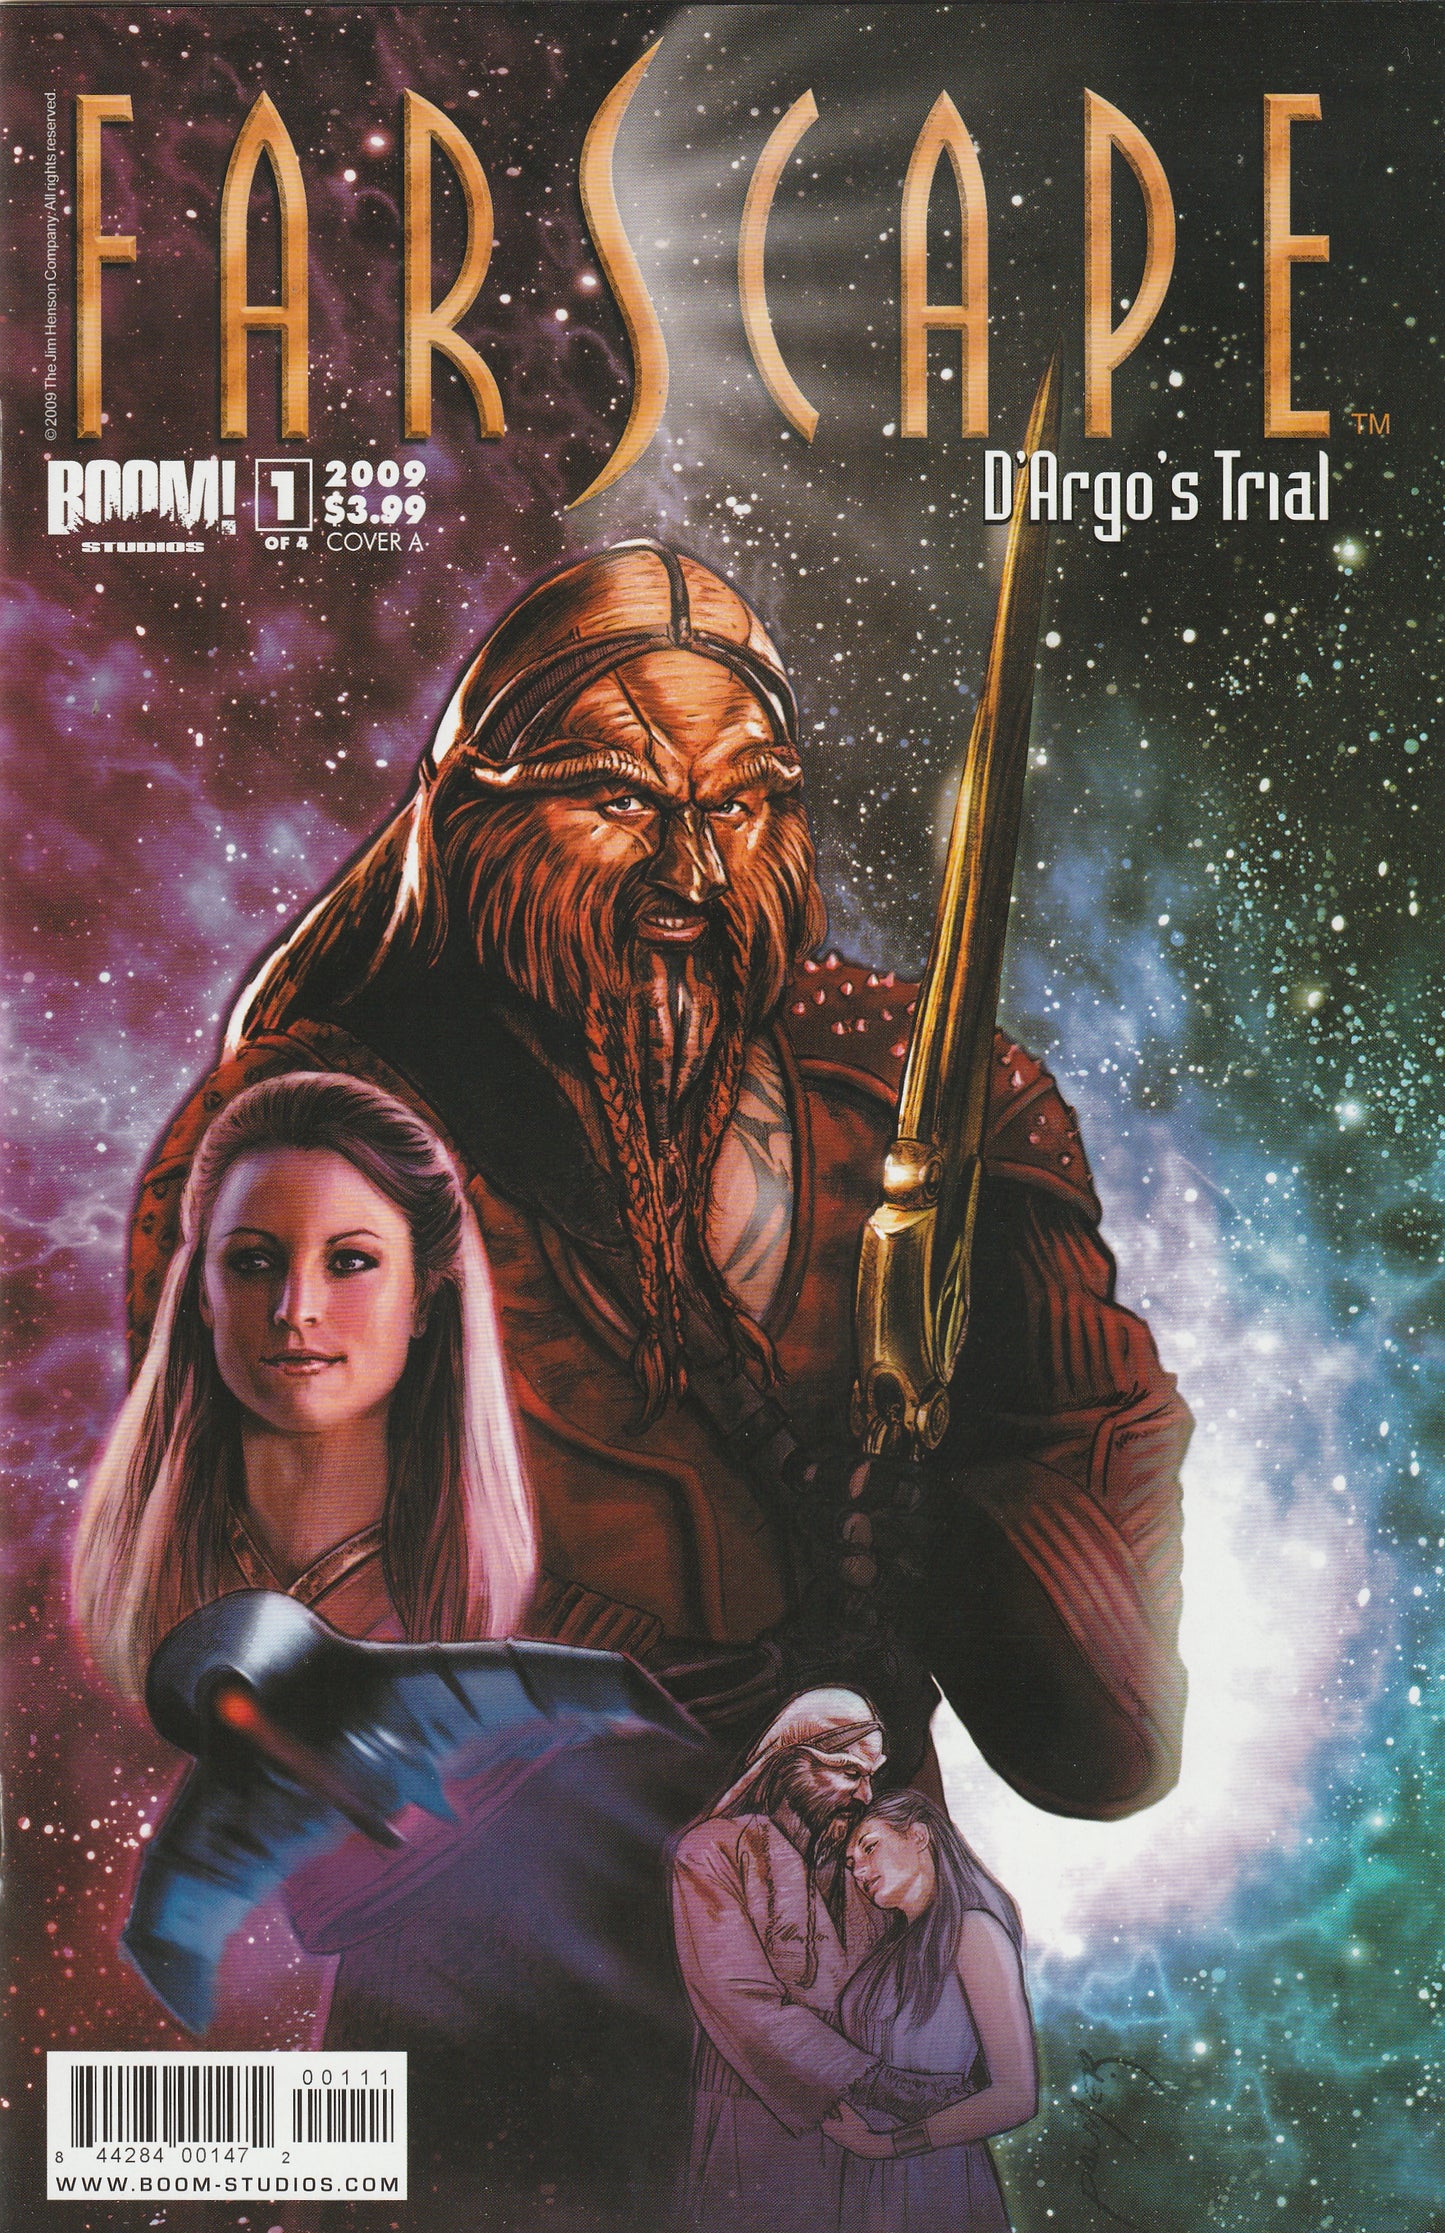 Farscape: D'Argo's Trial (2009) - 4 issue mini series